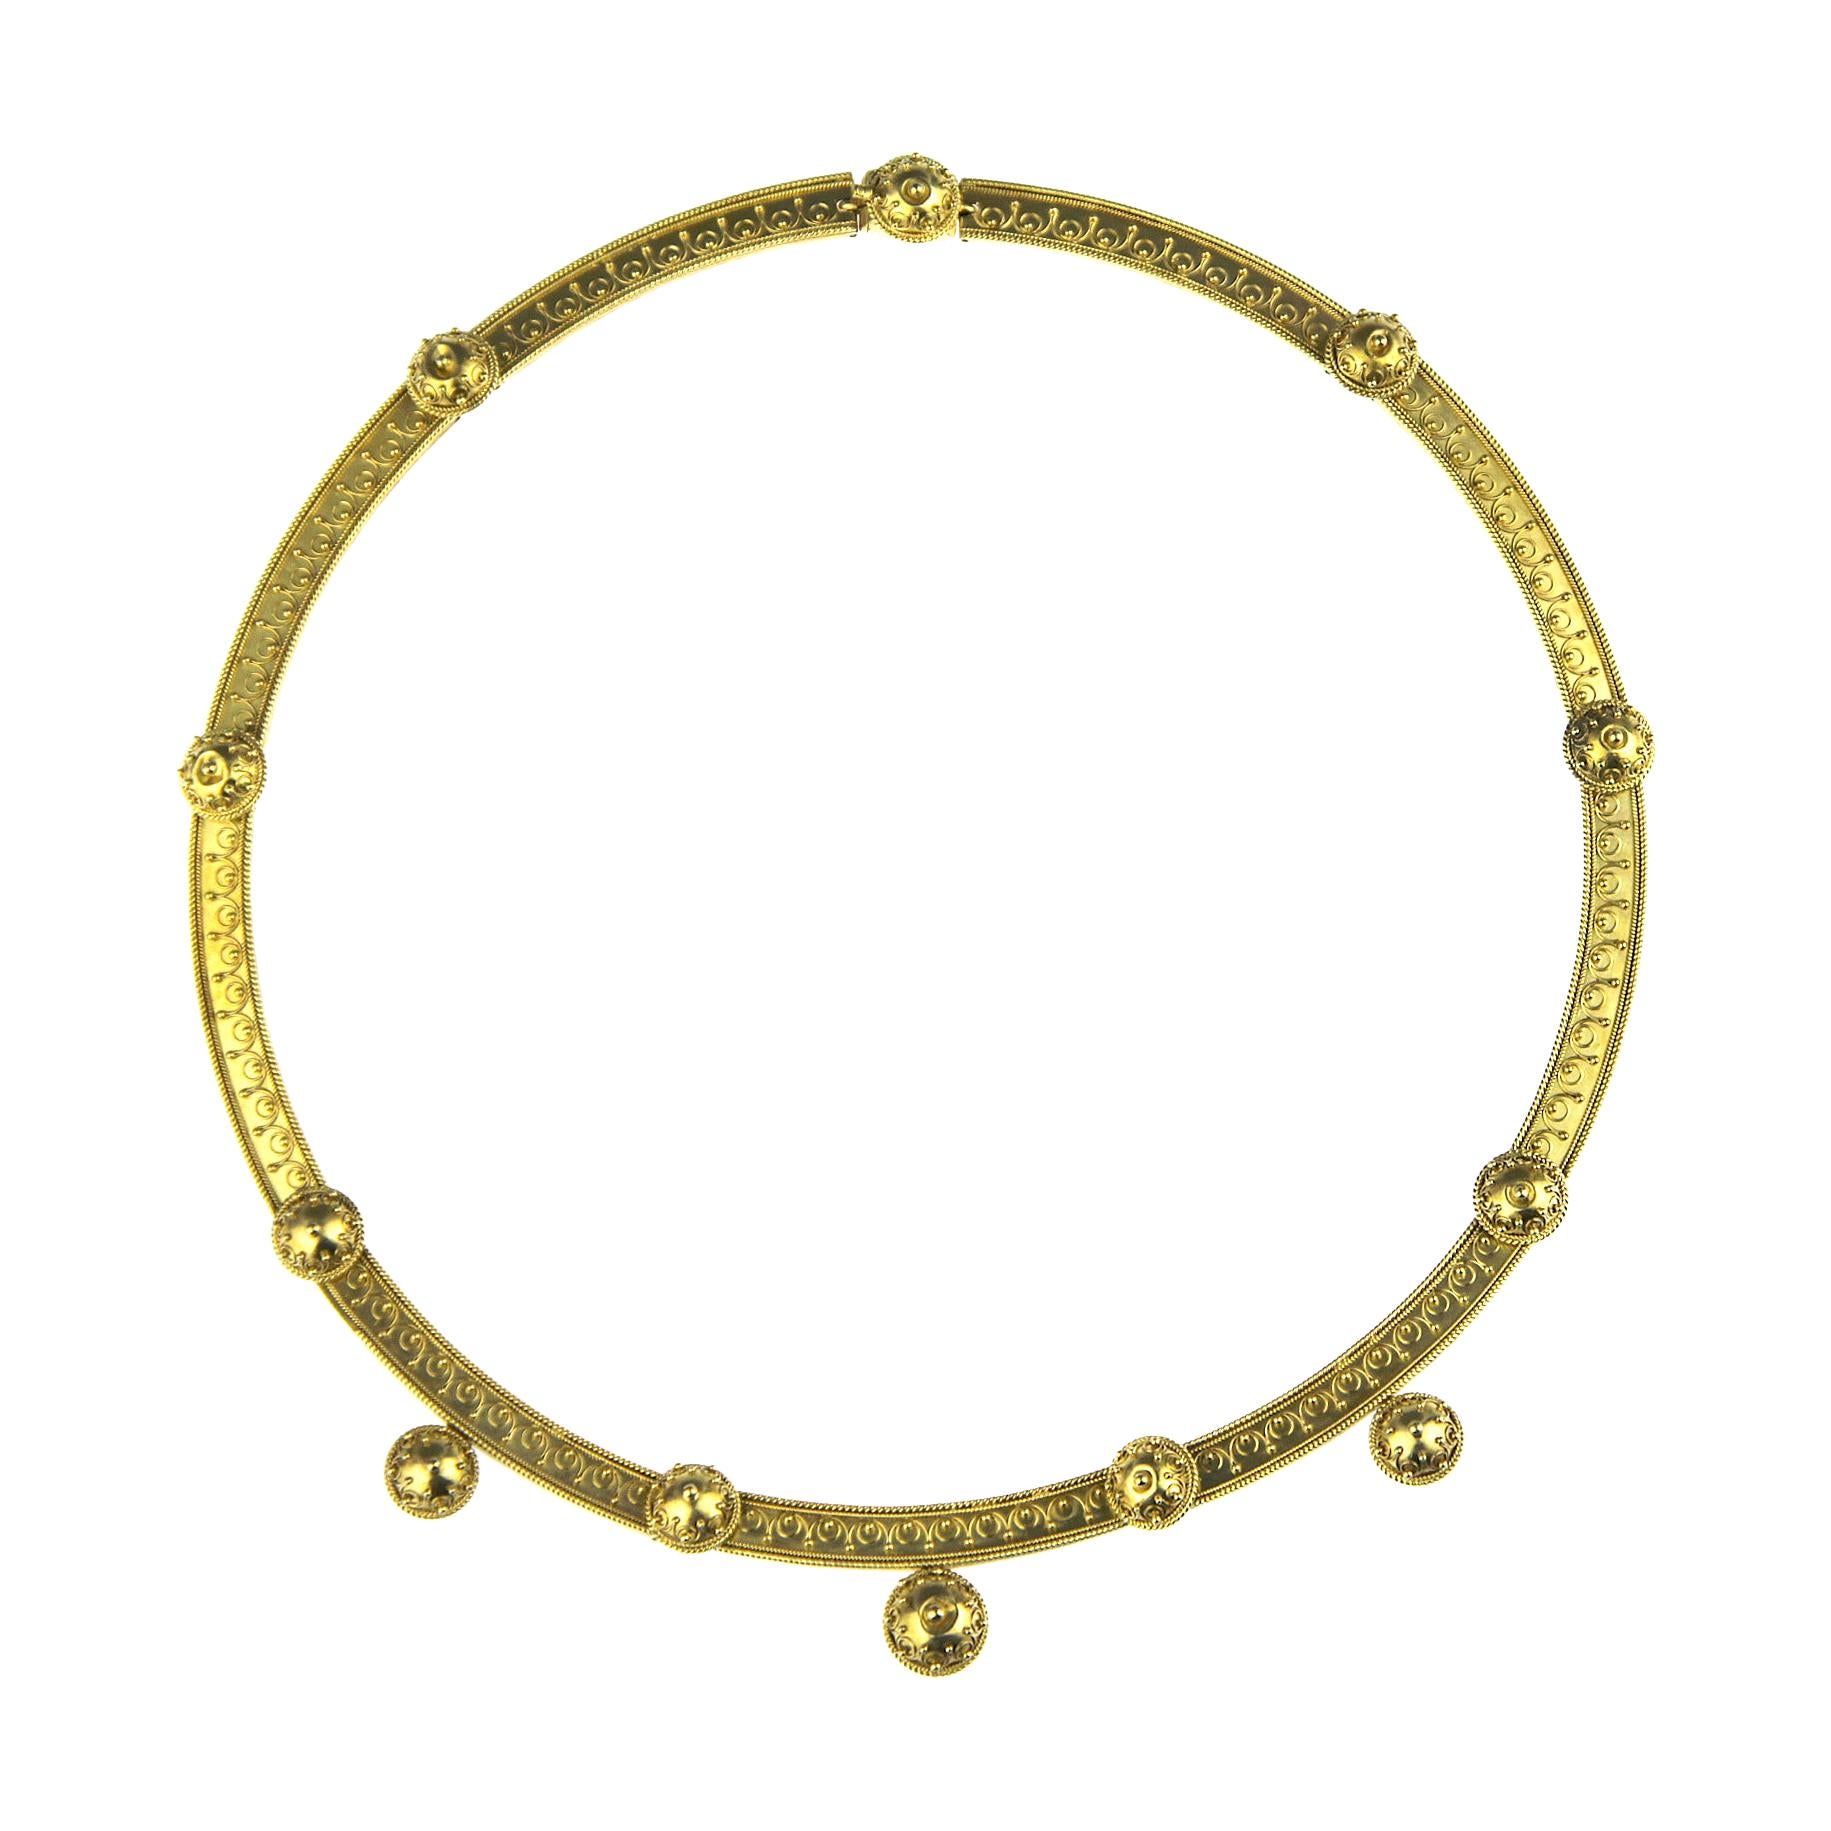 Antique Archaeological Revival 15K Gold Necklace